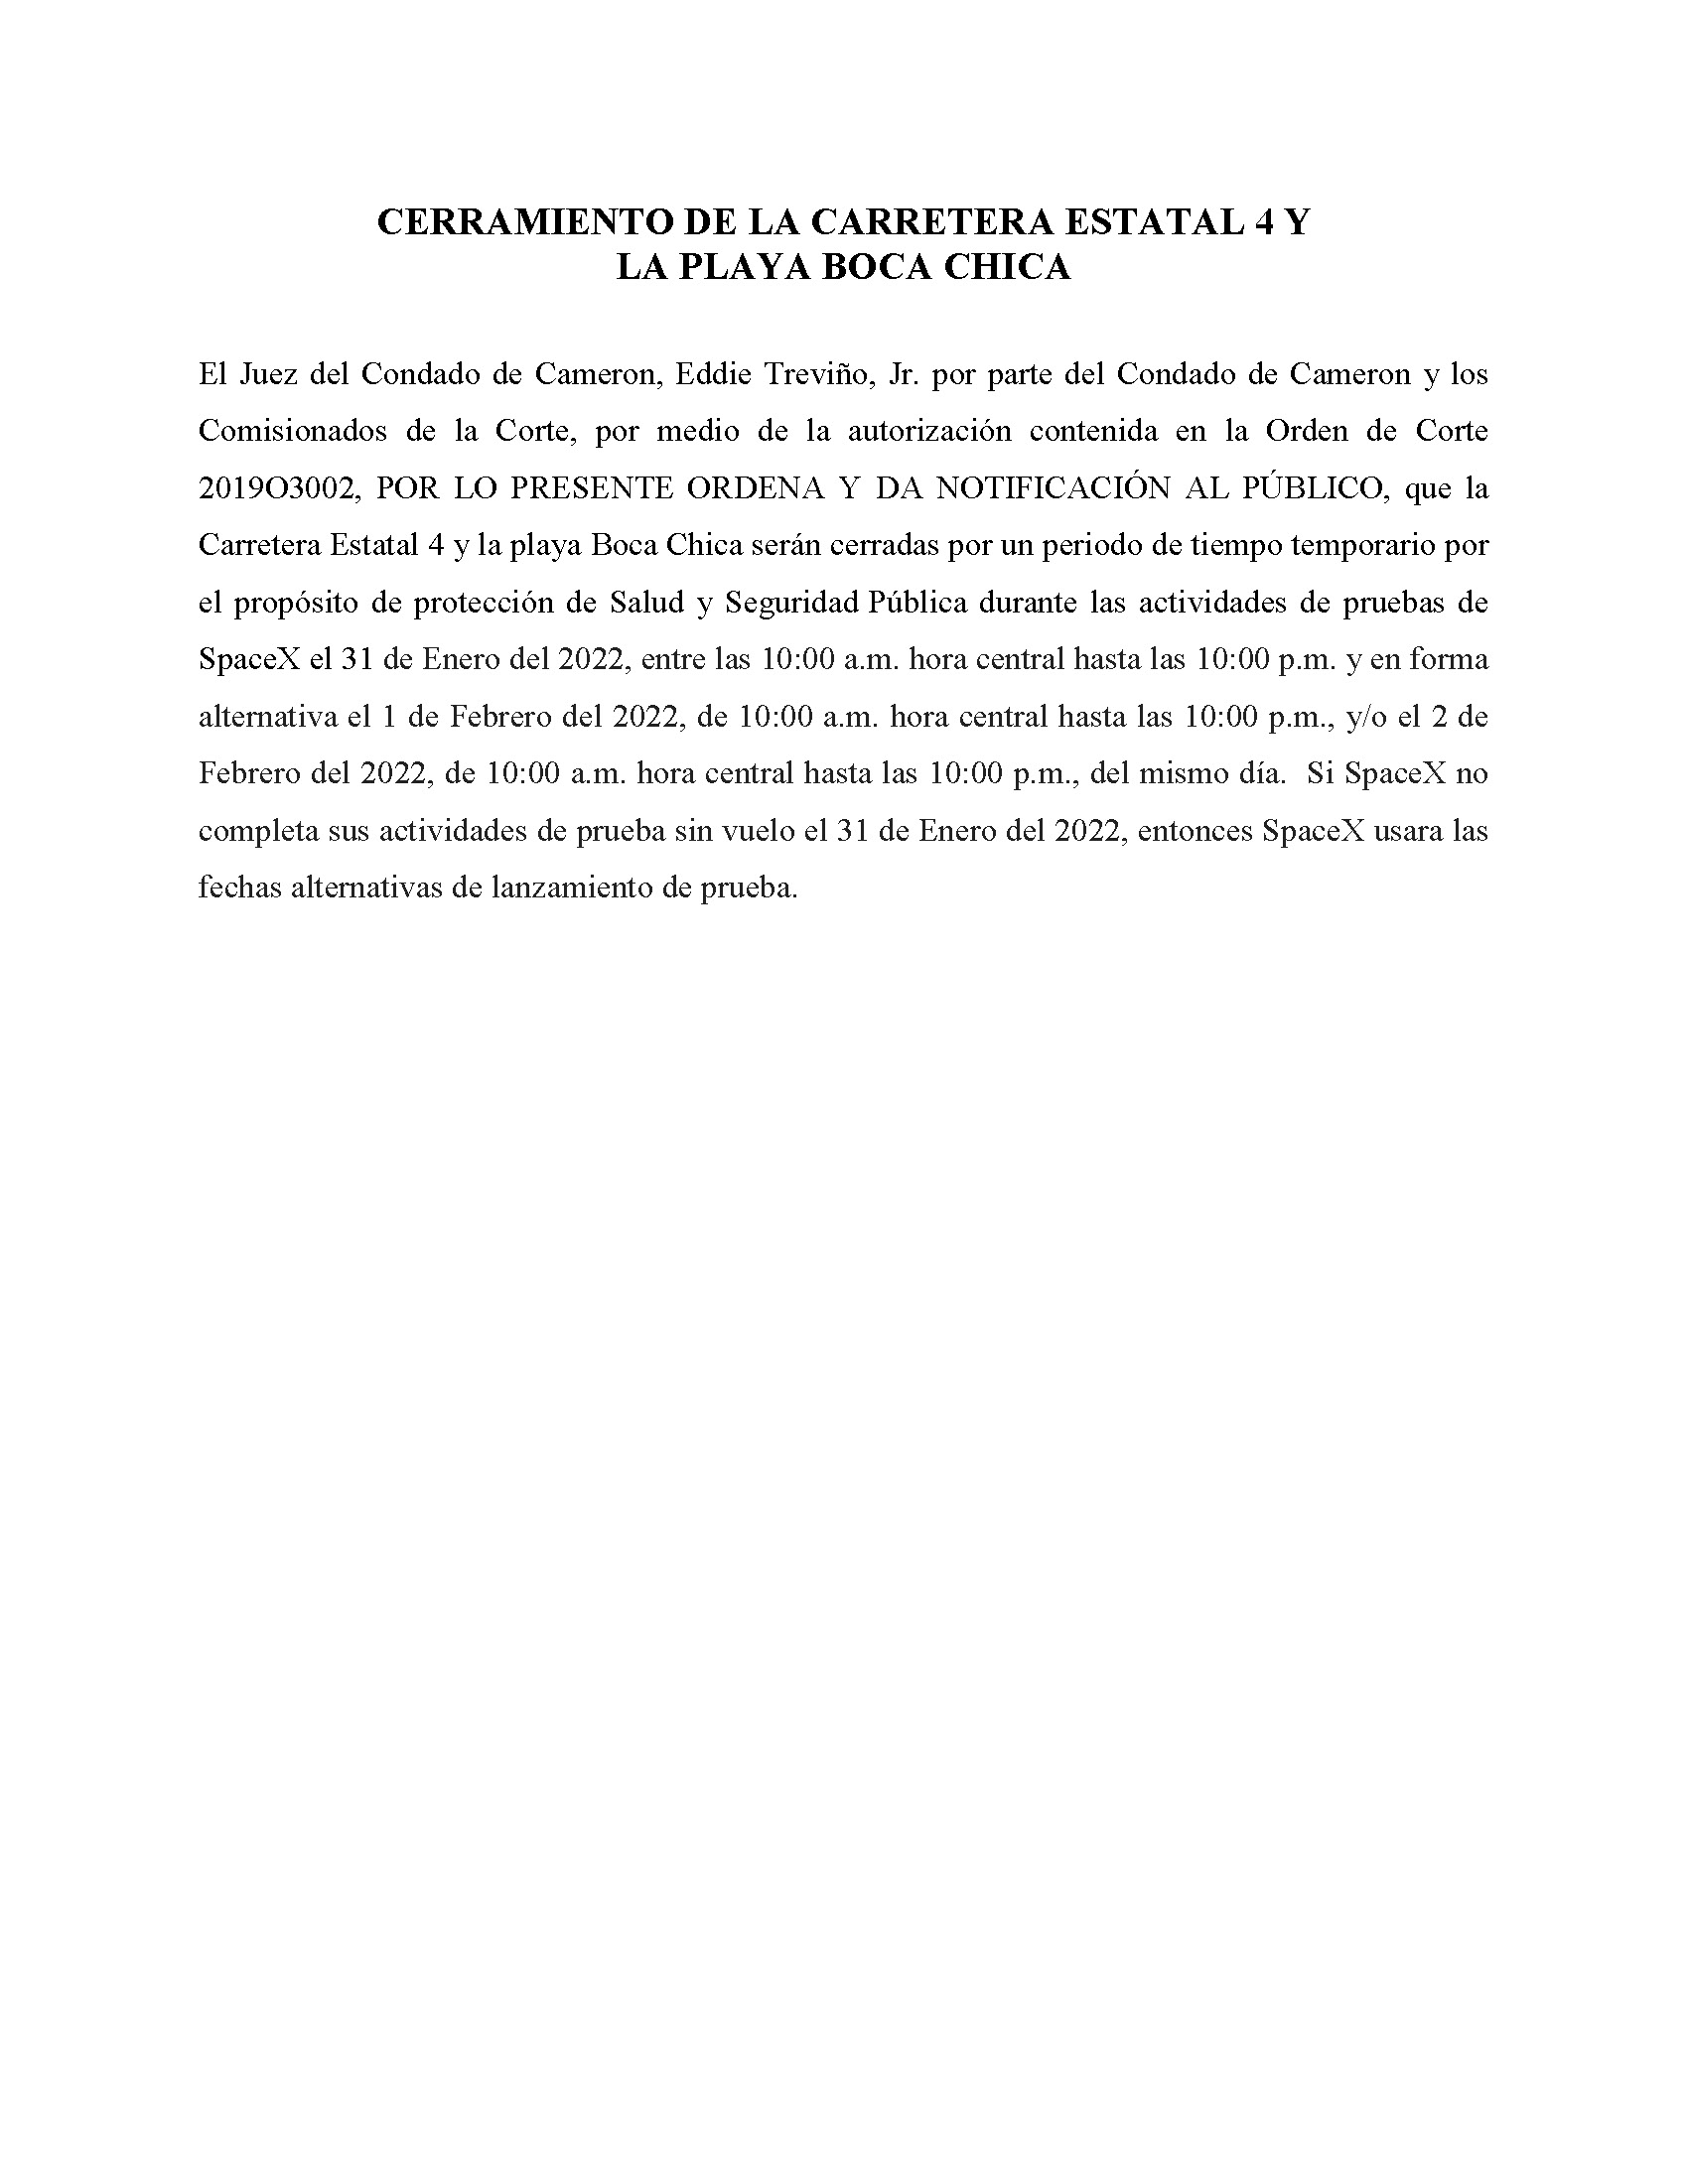 ORDER.CLOSURE OF HIGHWAY 4 Y LA PLAYA BOCA CHICA.SPANISH.01.31.2022